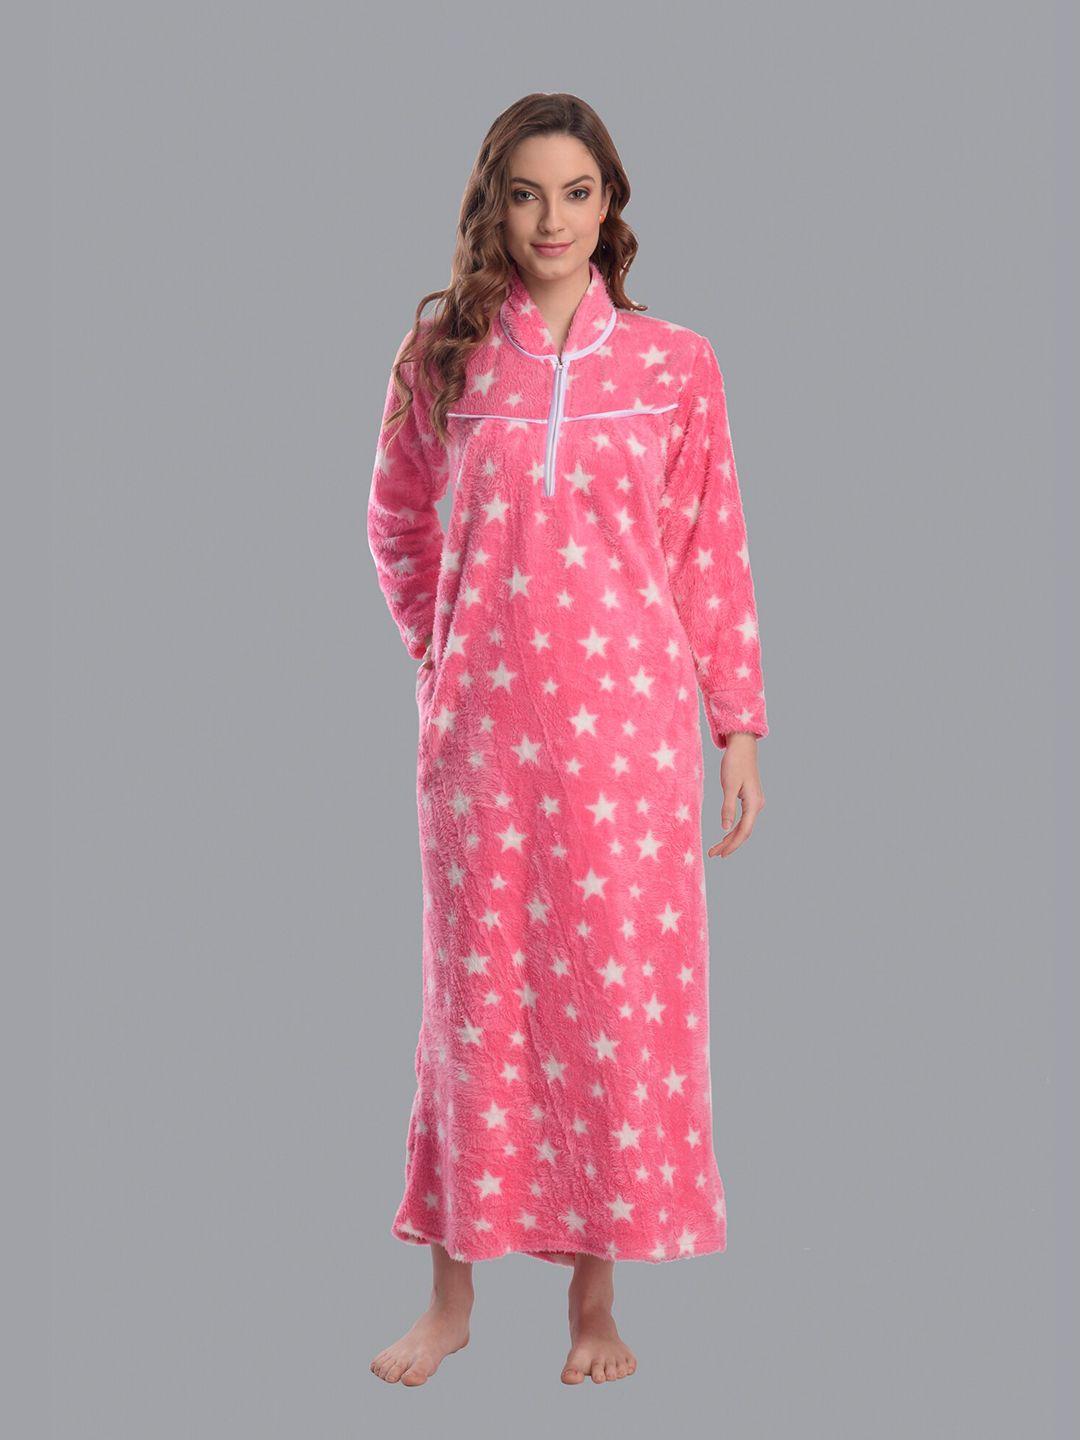 cierge pink & white star printed maxi nightdress